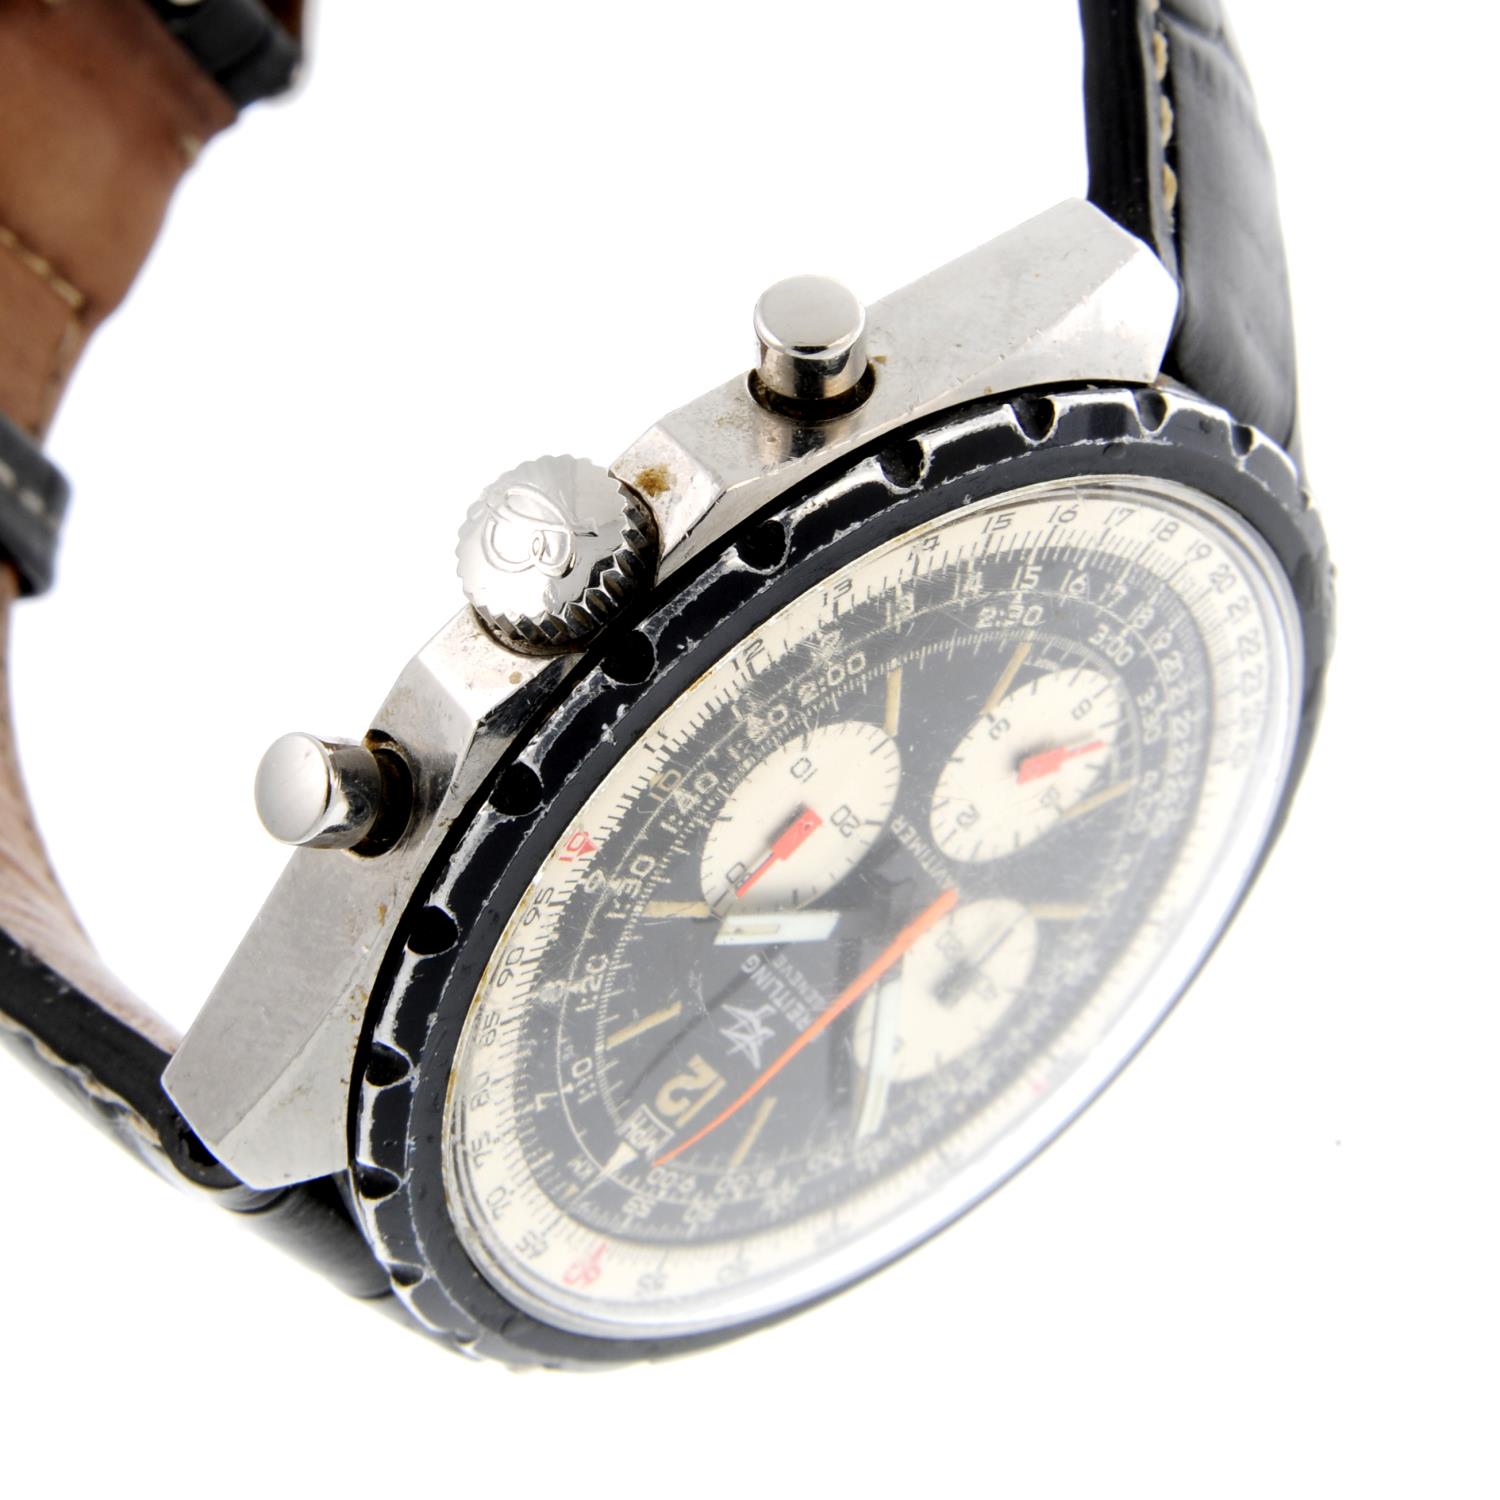 BREITLING - a gentleman's Navitimer chronograph wrist watch. - Image 4 of 5